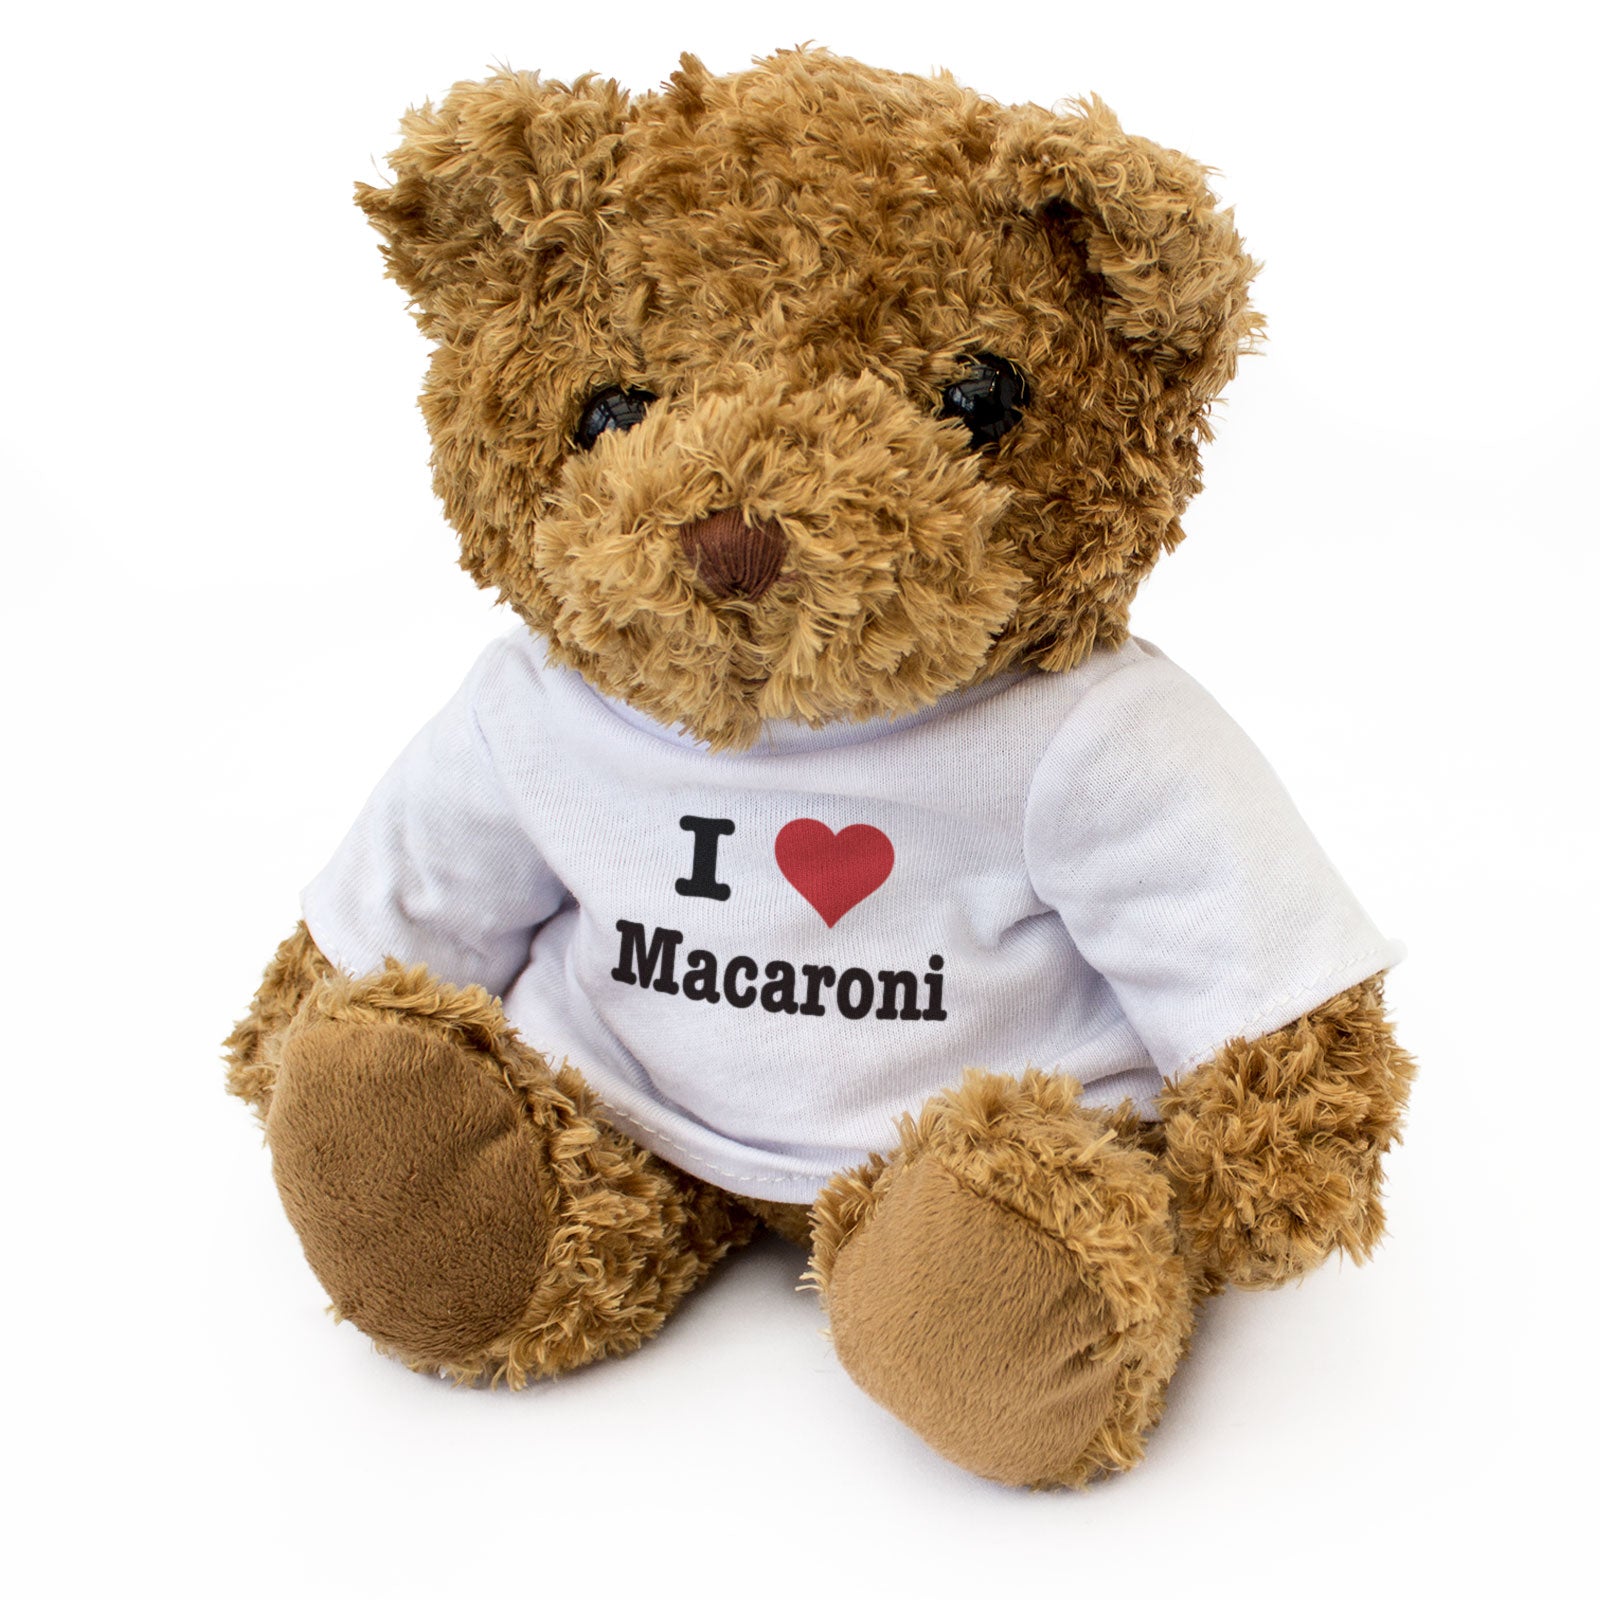 I Love Macaroni - Teddy Bear